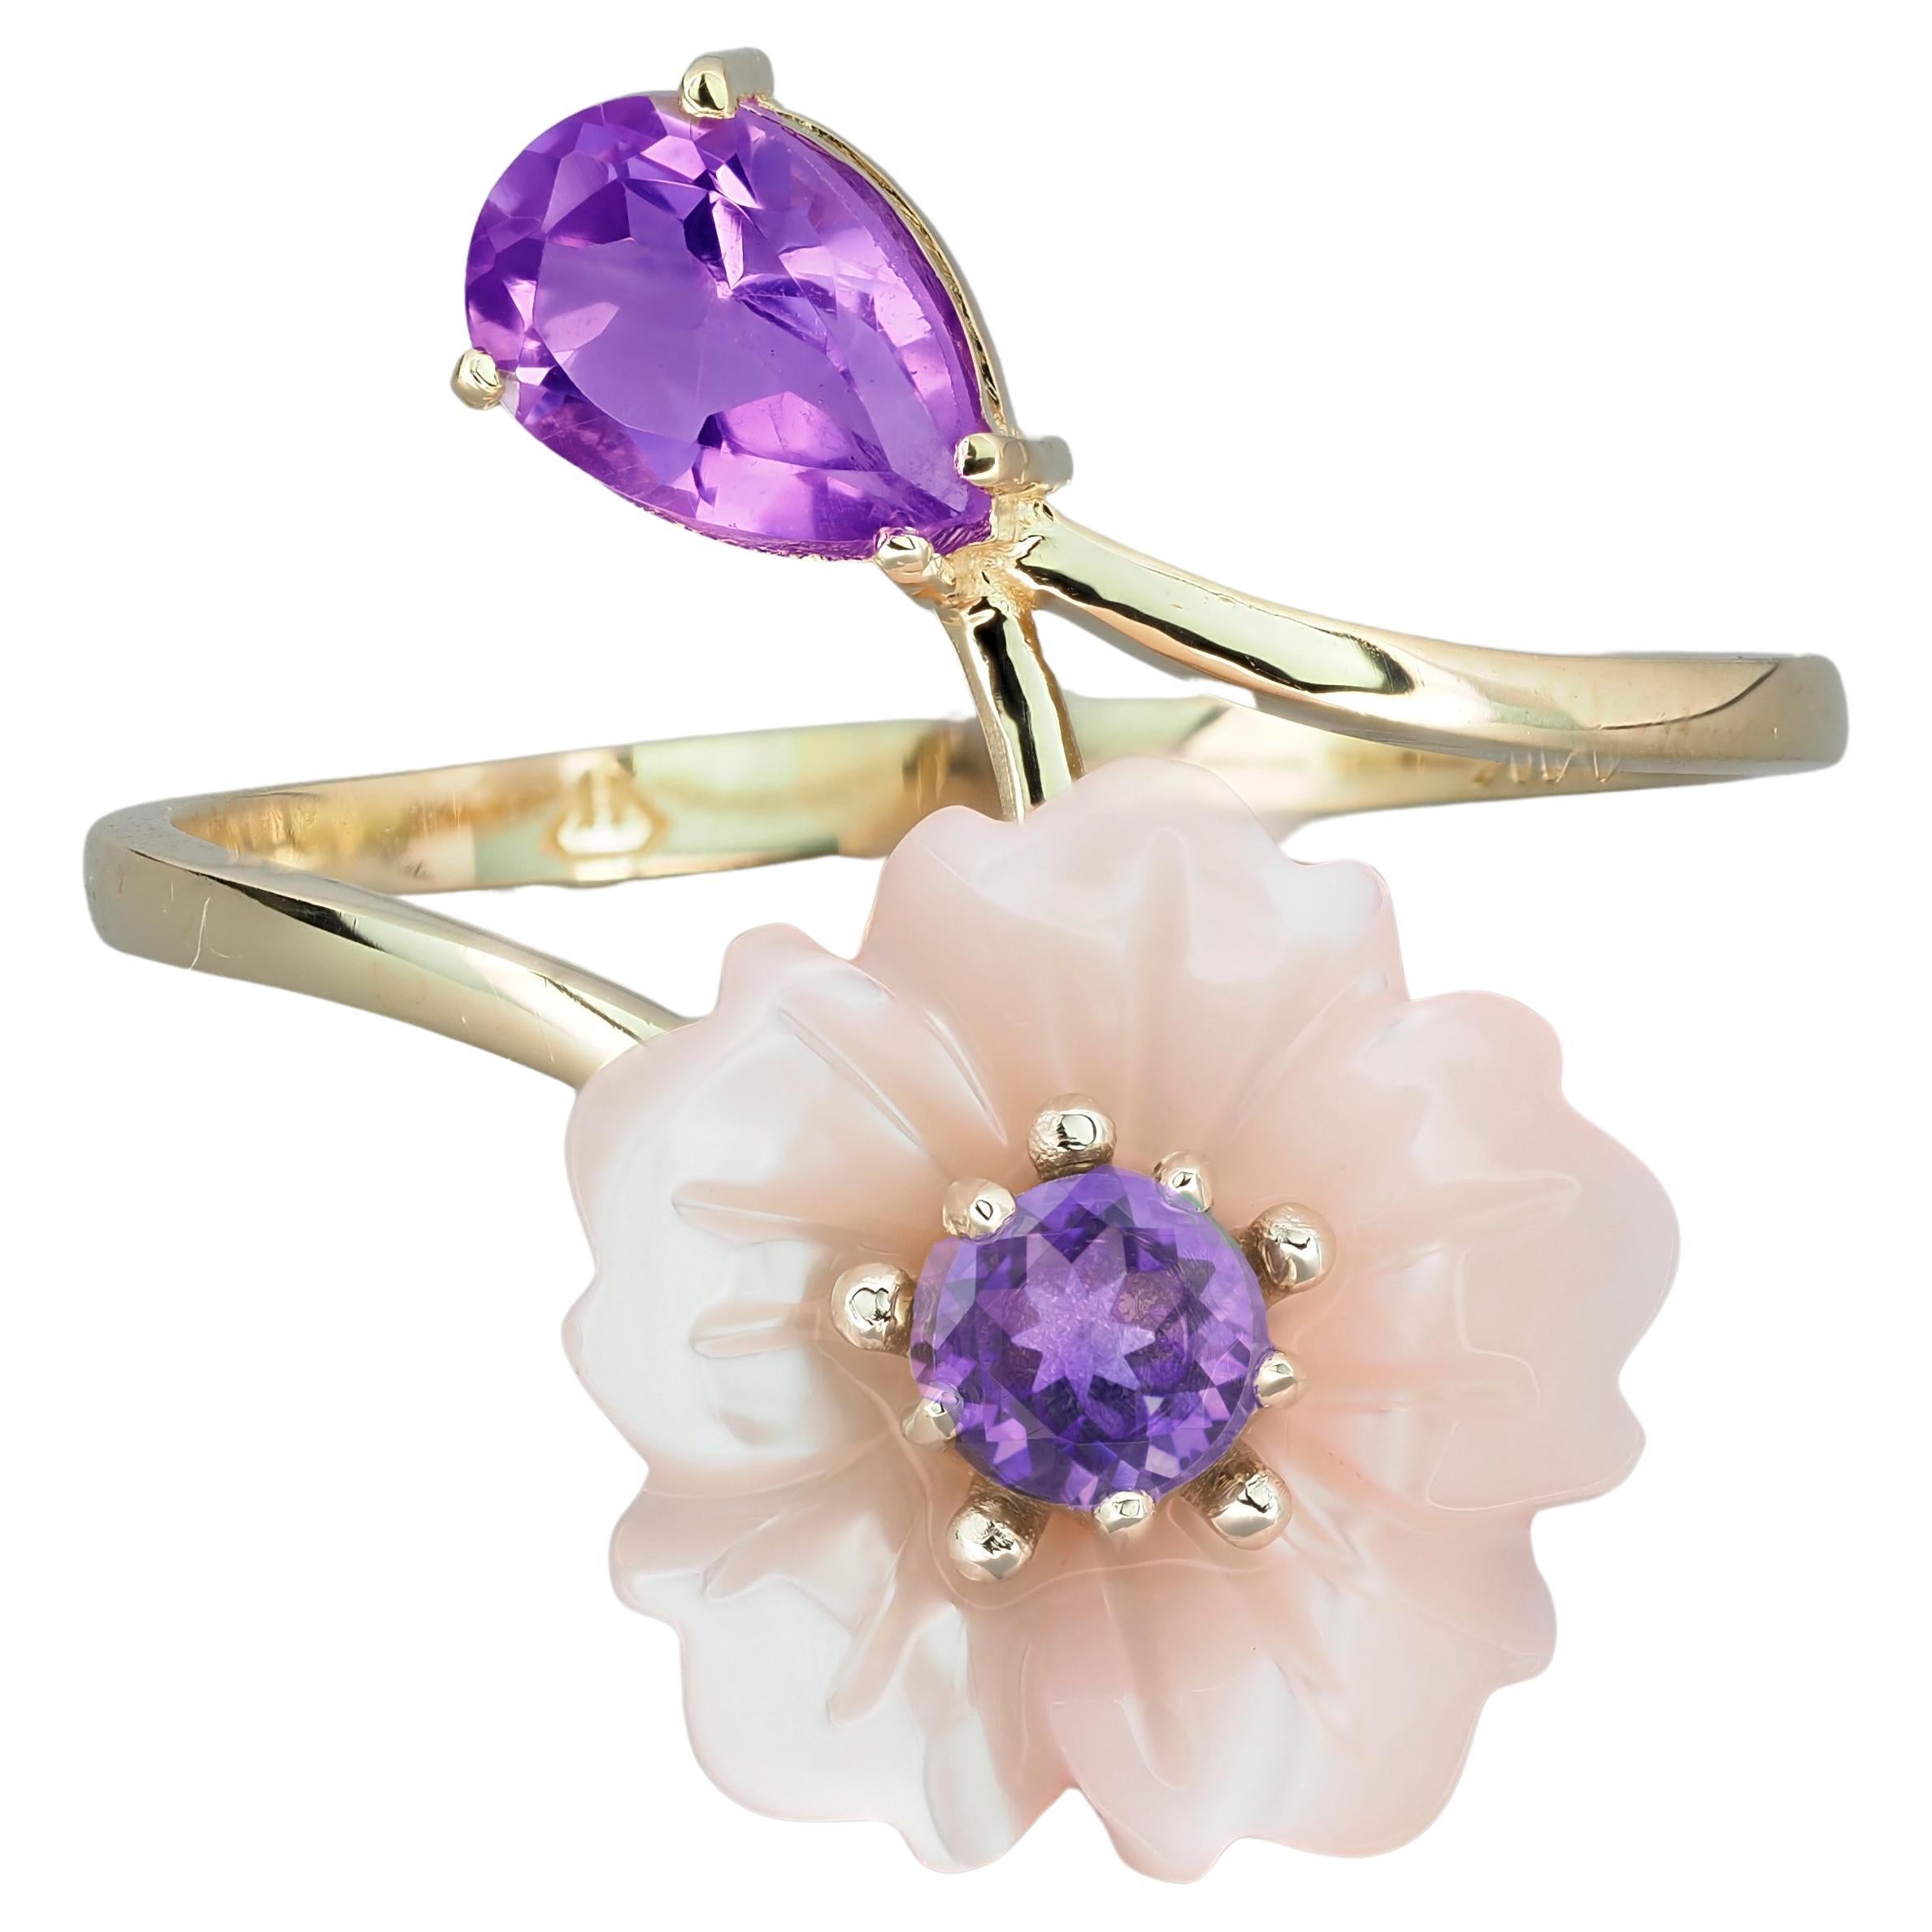 Carved Flower 14k ring with gemstones For Sale